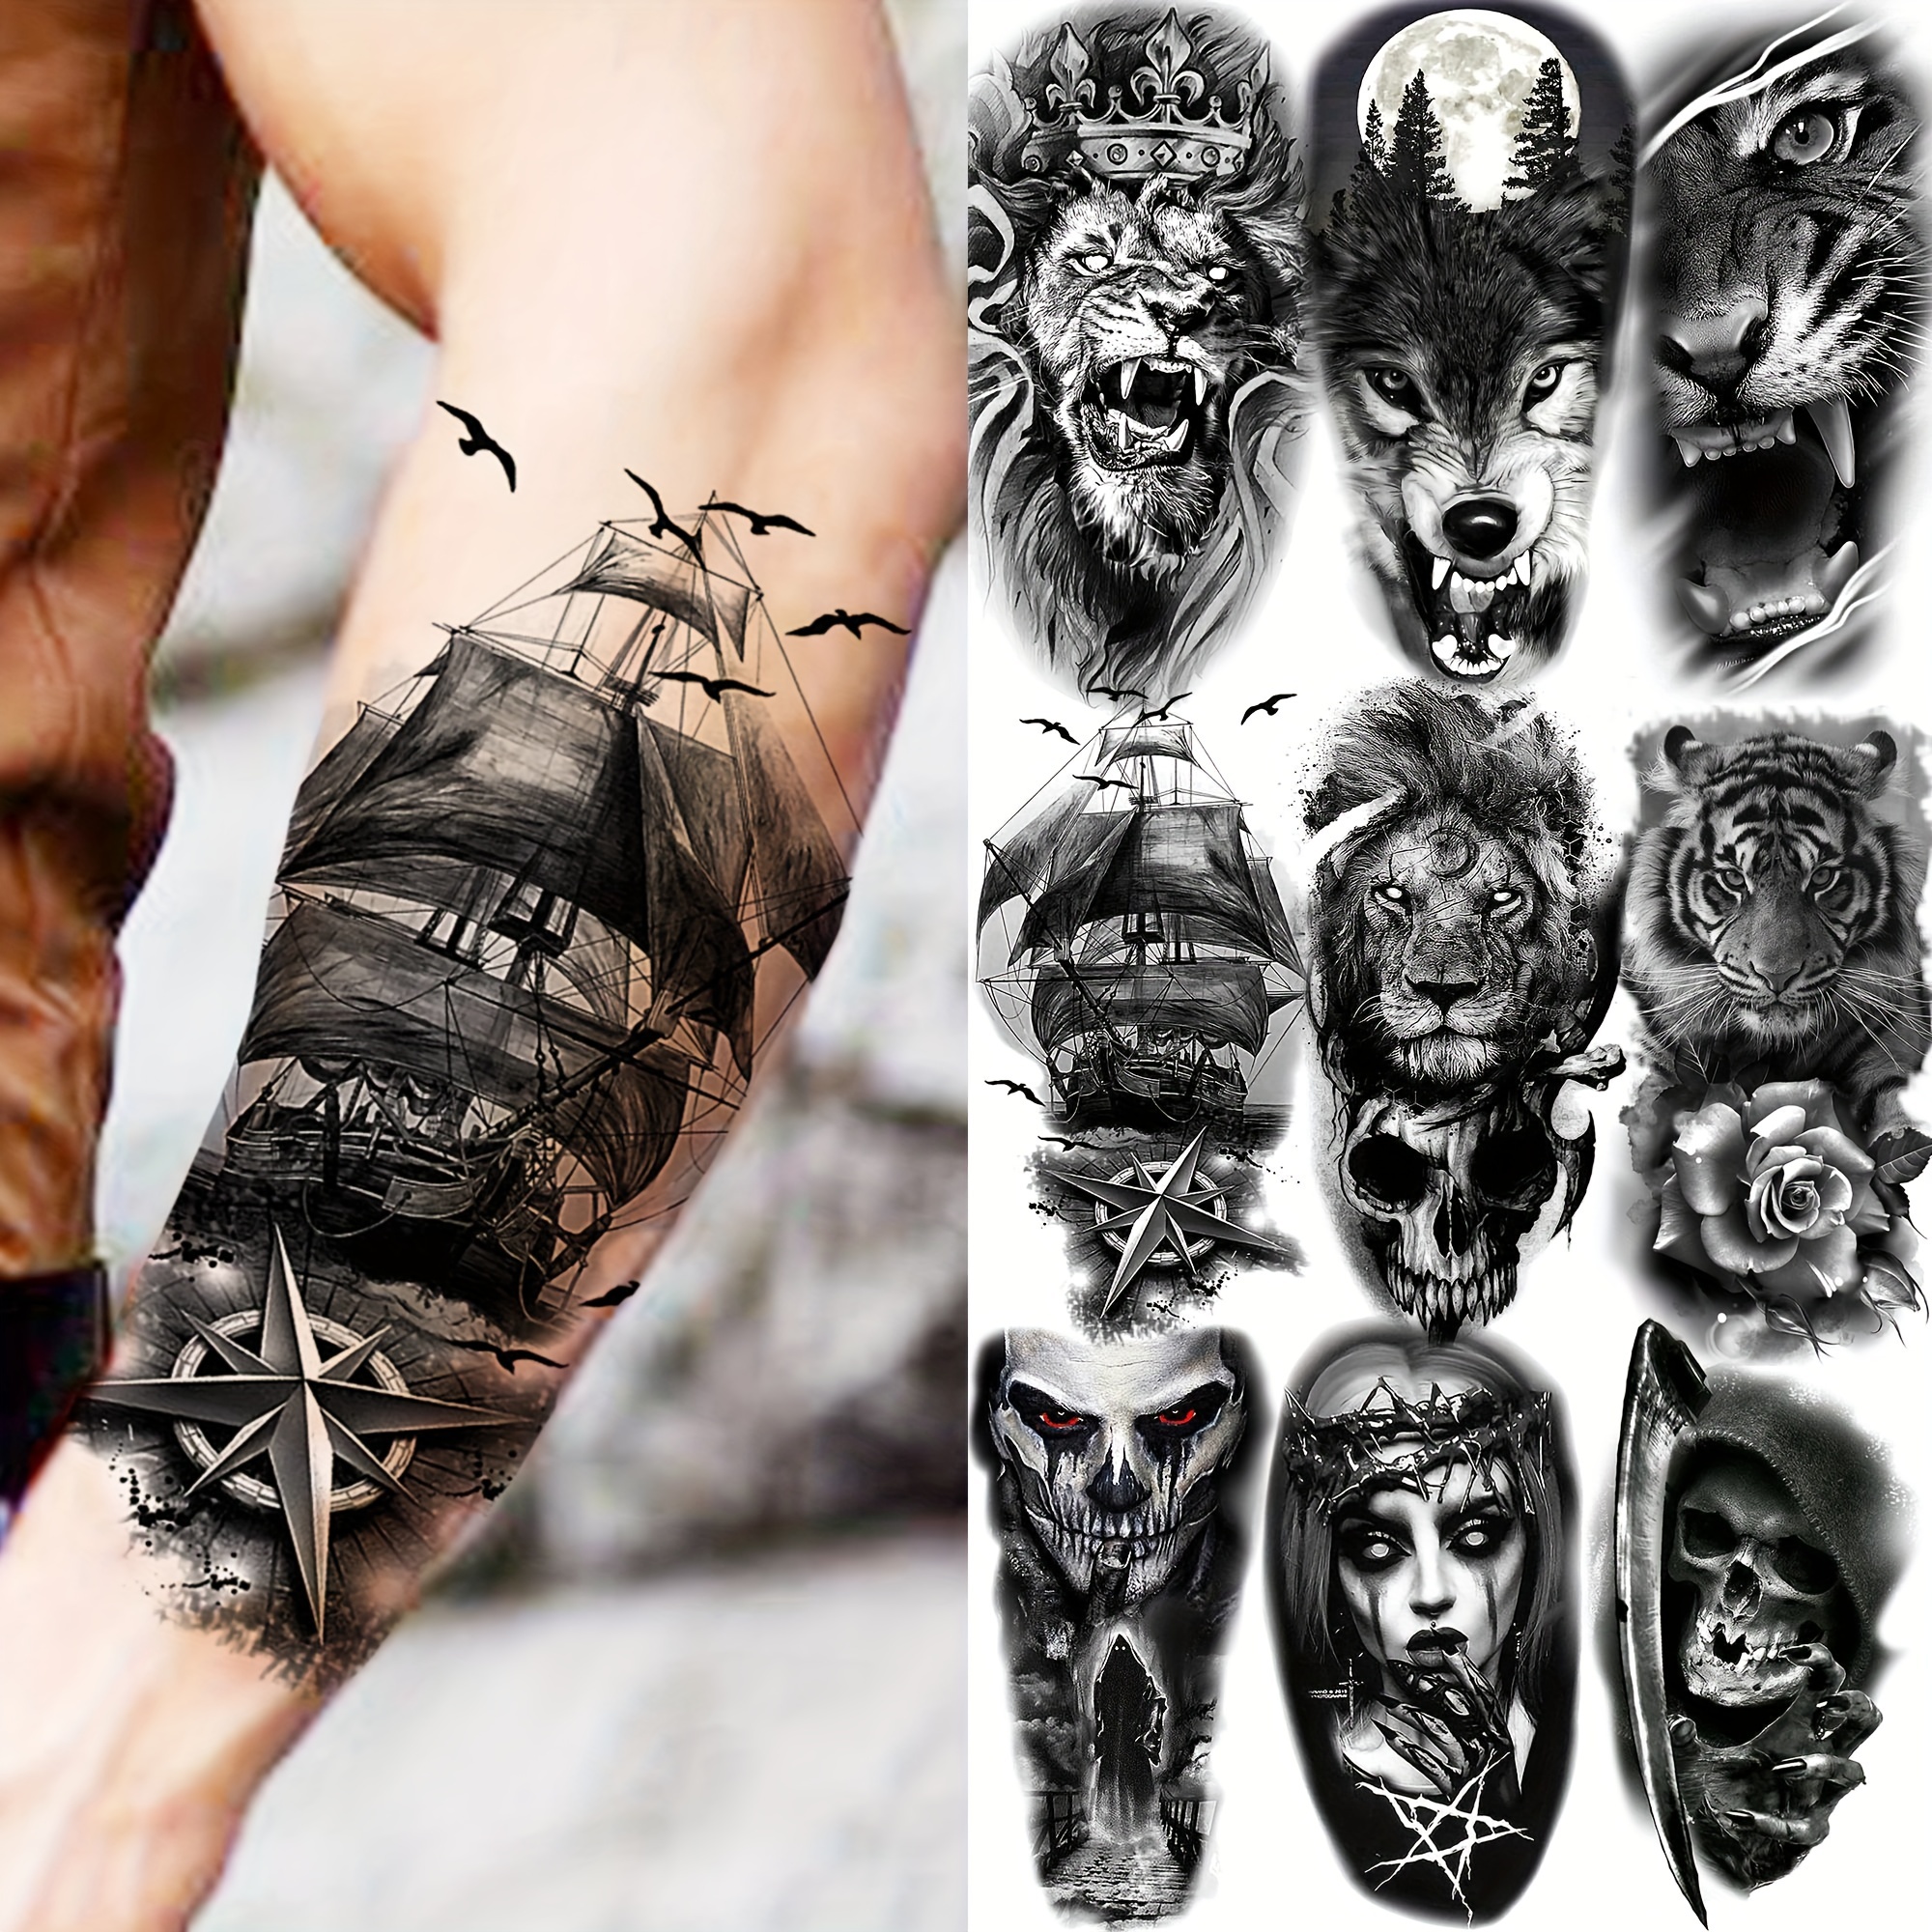 Fake Temporary Tattoo Sleeve Nylon Arm Stocking Black Gangster